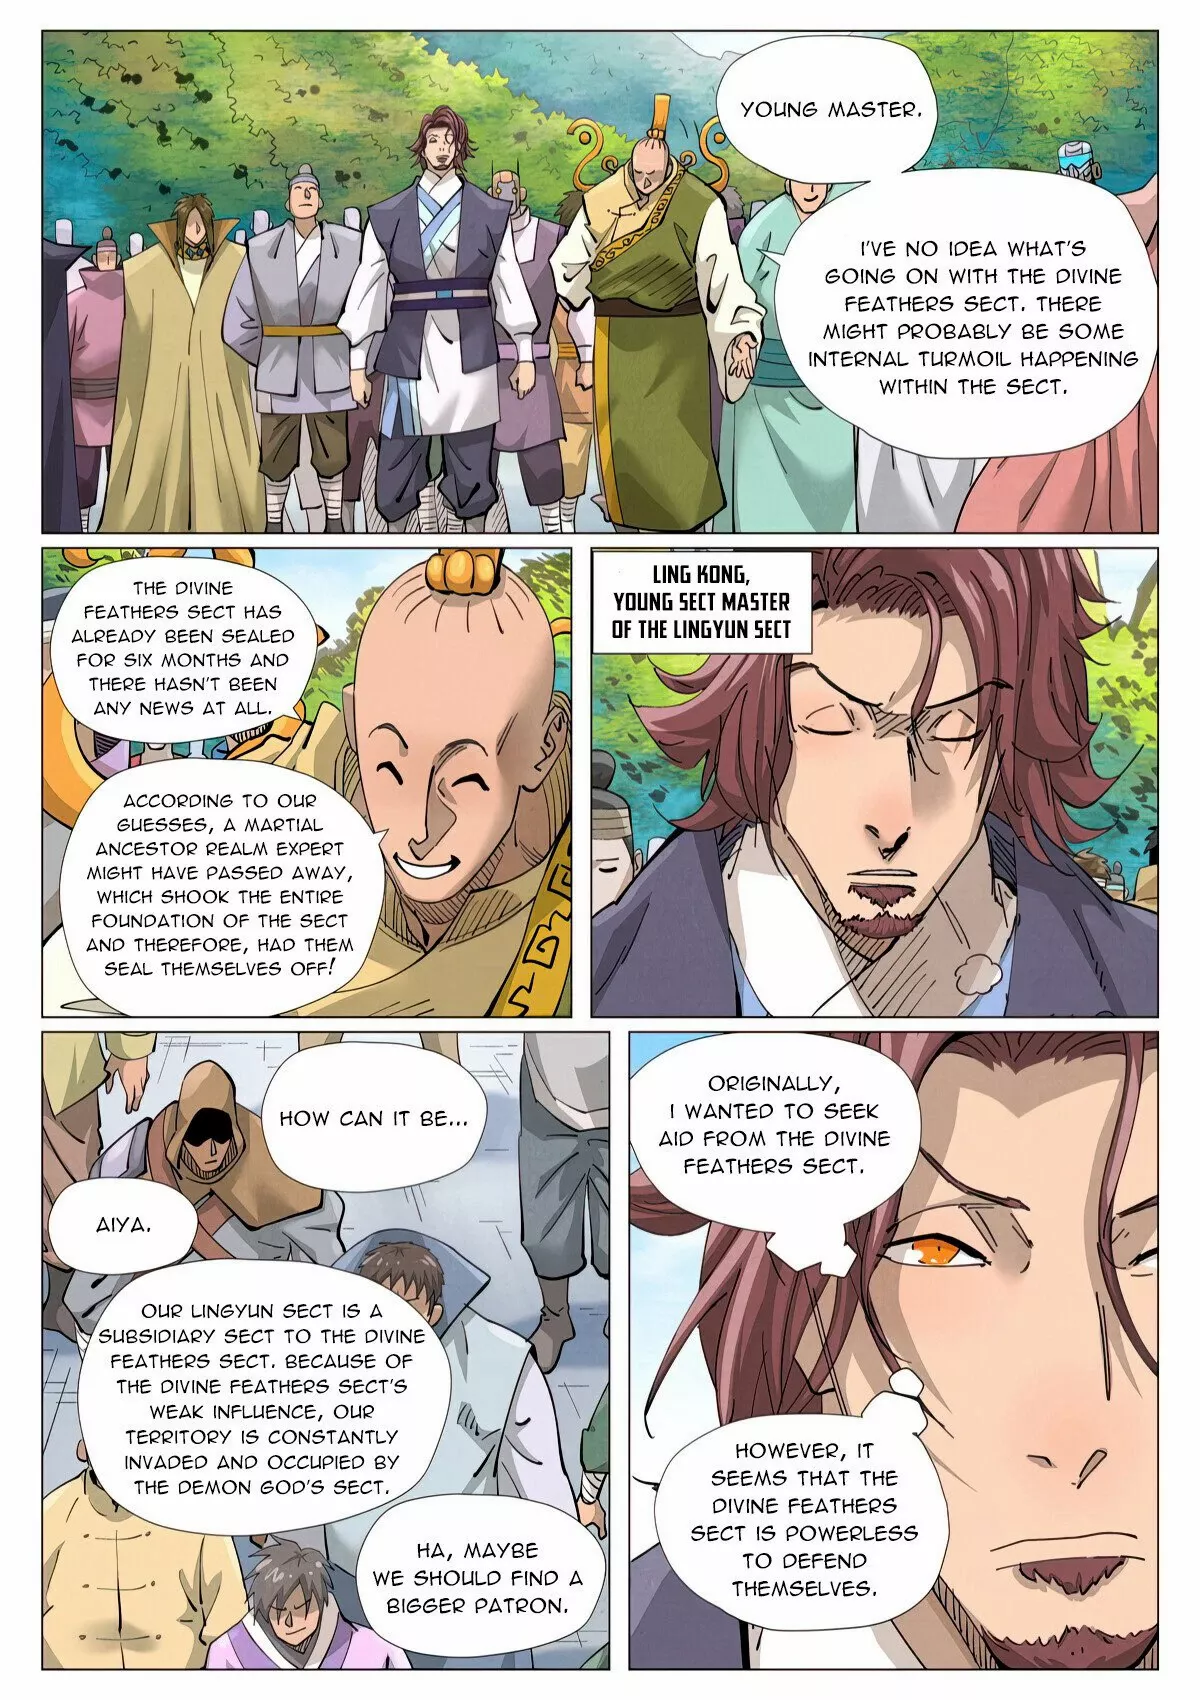 Tales Of Demons And Gods Chapter 429.6 page 5 - Mangakakalot